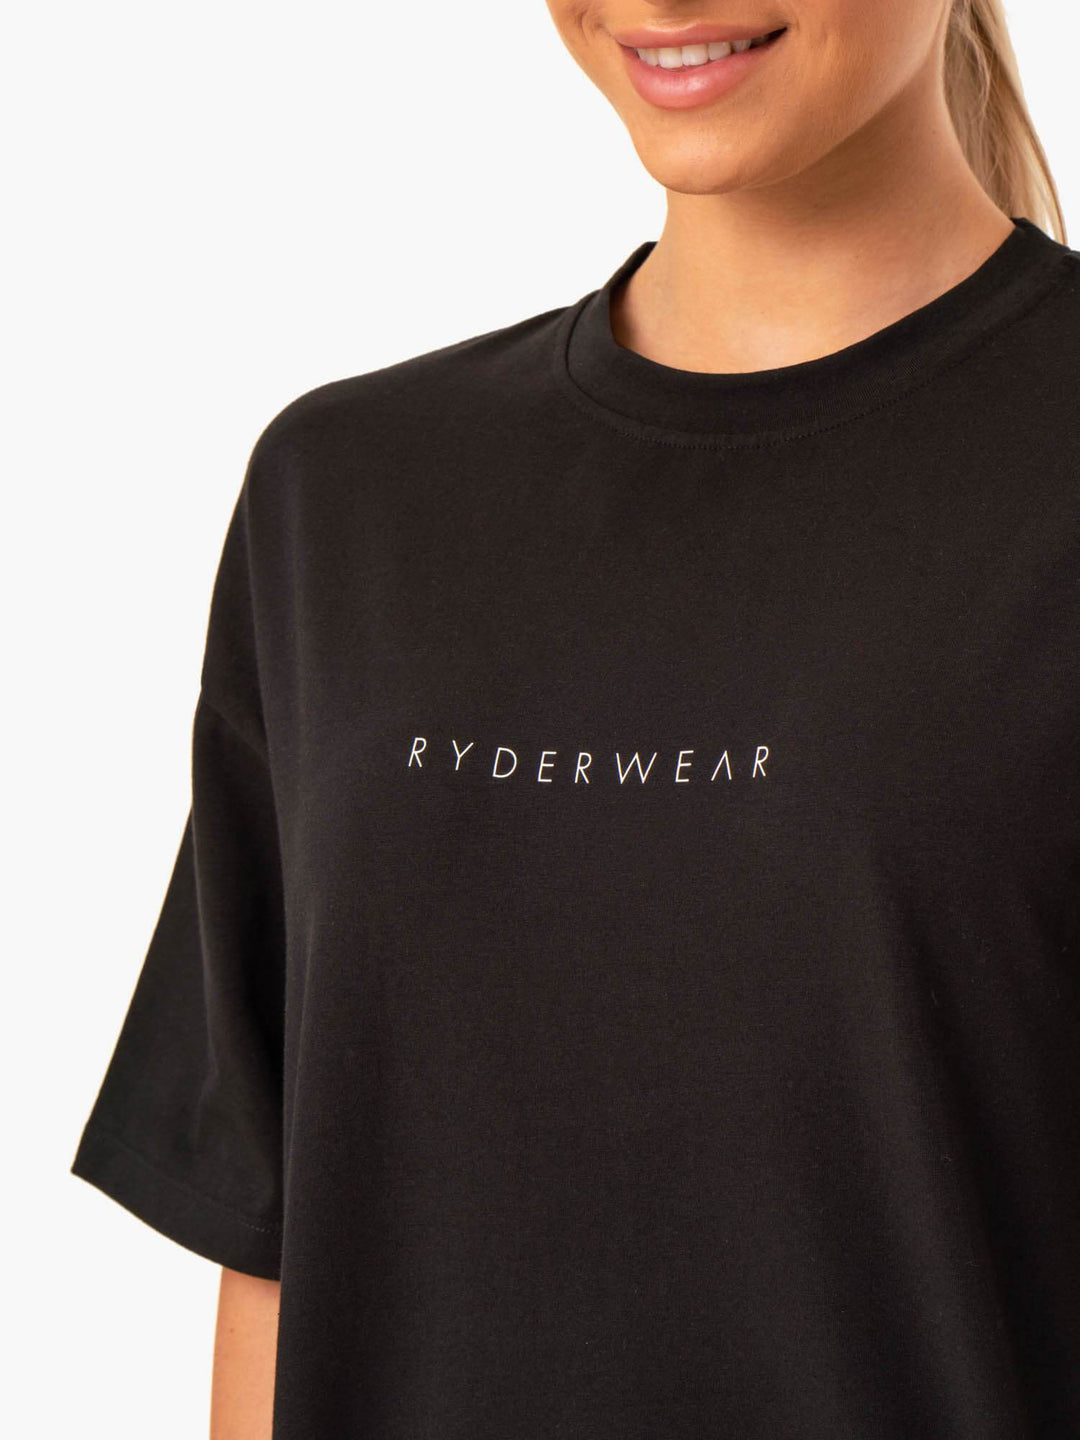 Ryderwear Mens Oversized T-Shirt - Black M